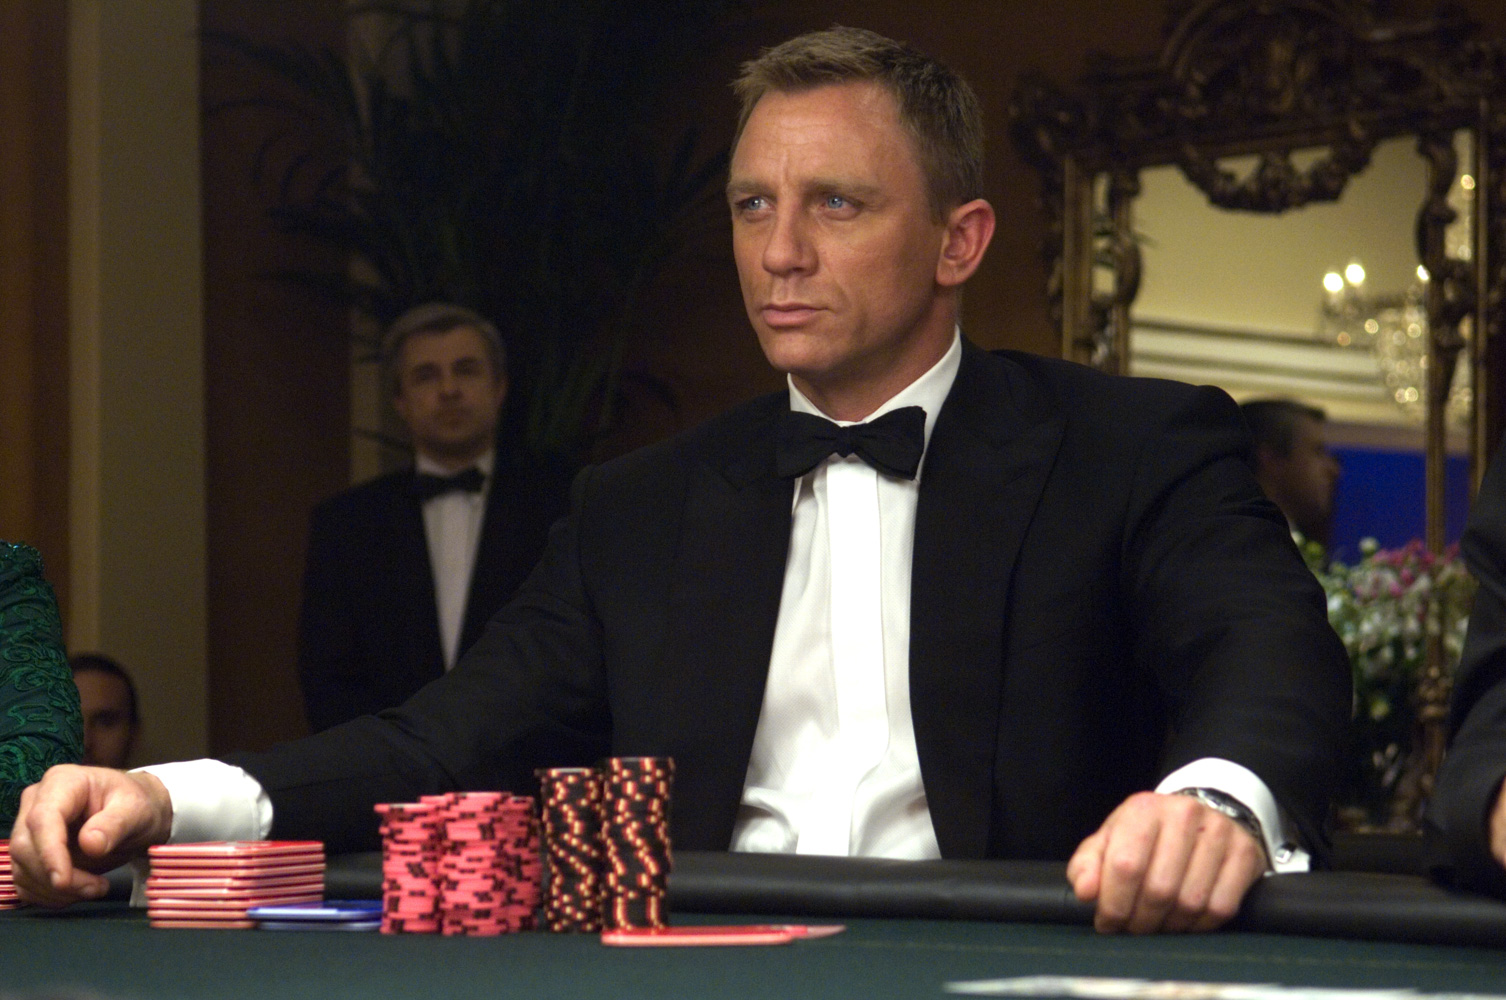 The James Bond London Tour To Experience Britain's Capital Like 007